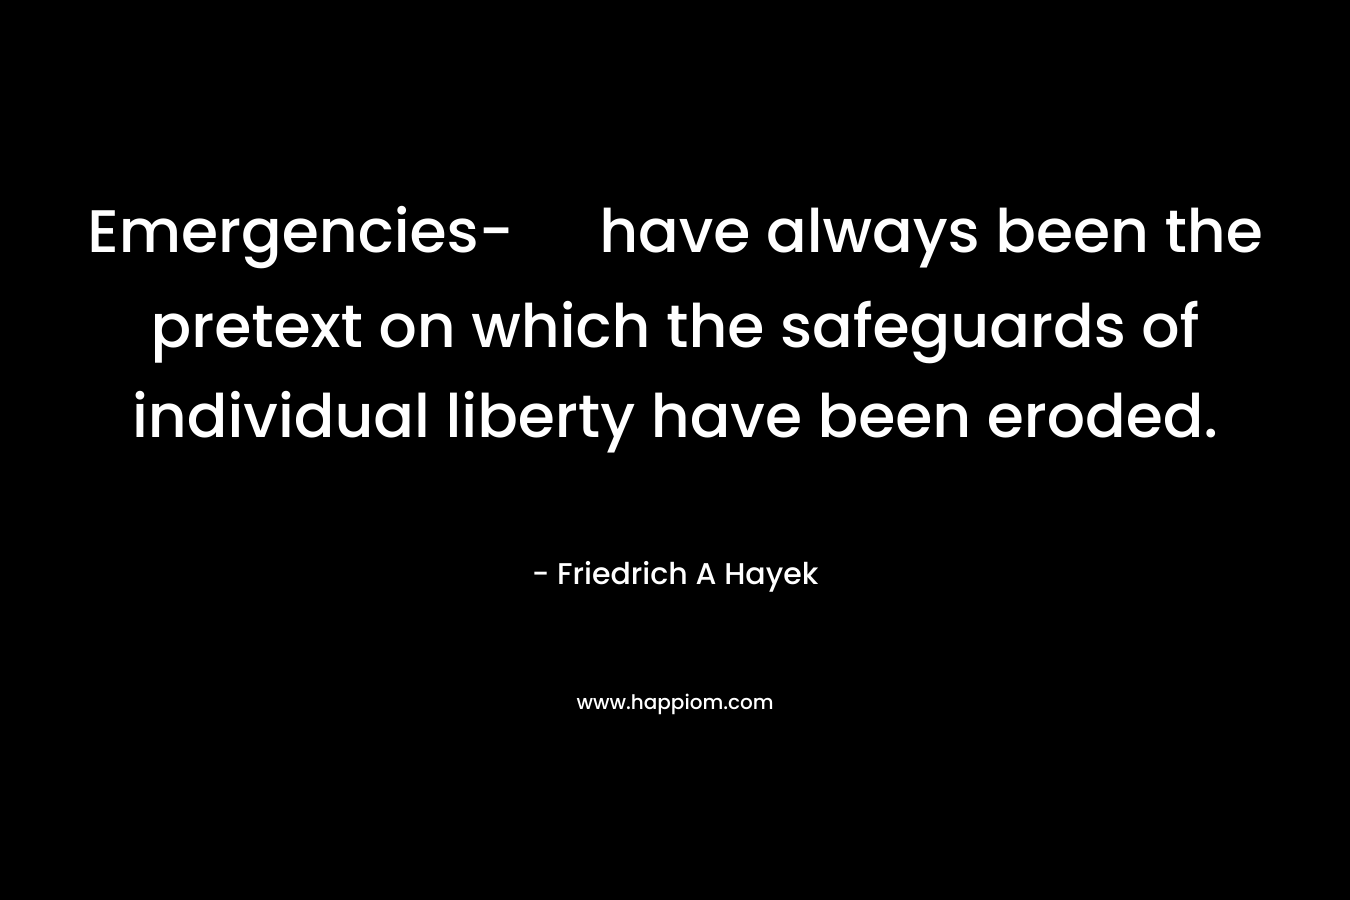 Emergencies- have always been the pretext on which the safeguards of individual liberty have been eroded. – Friedrich A Hayek